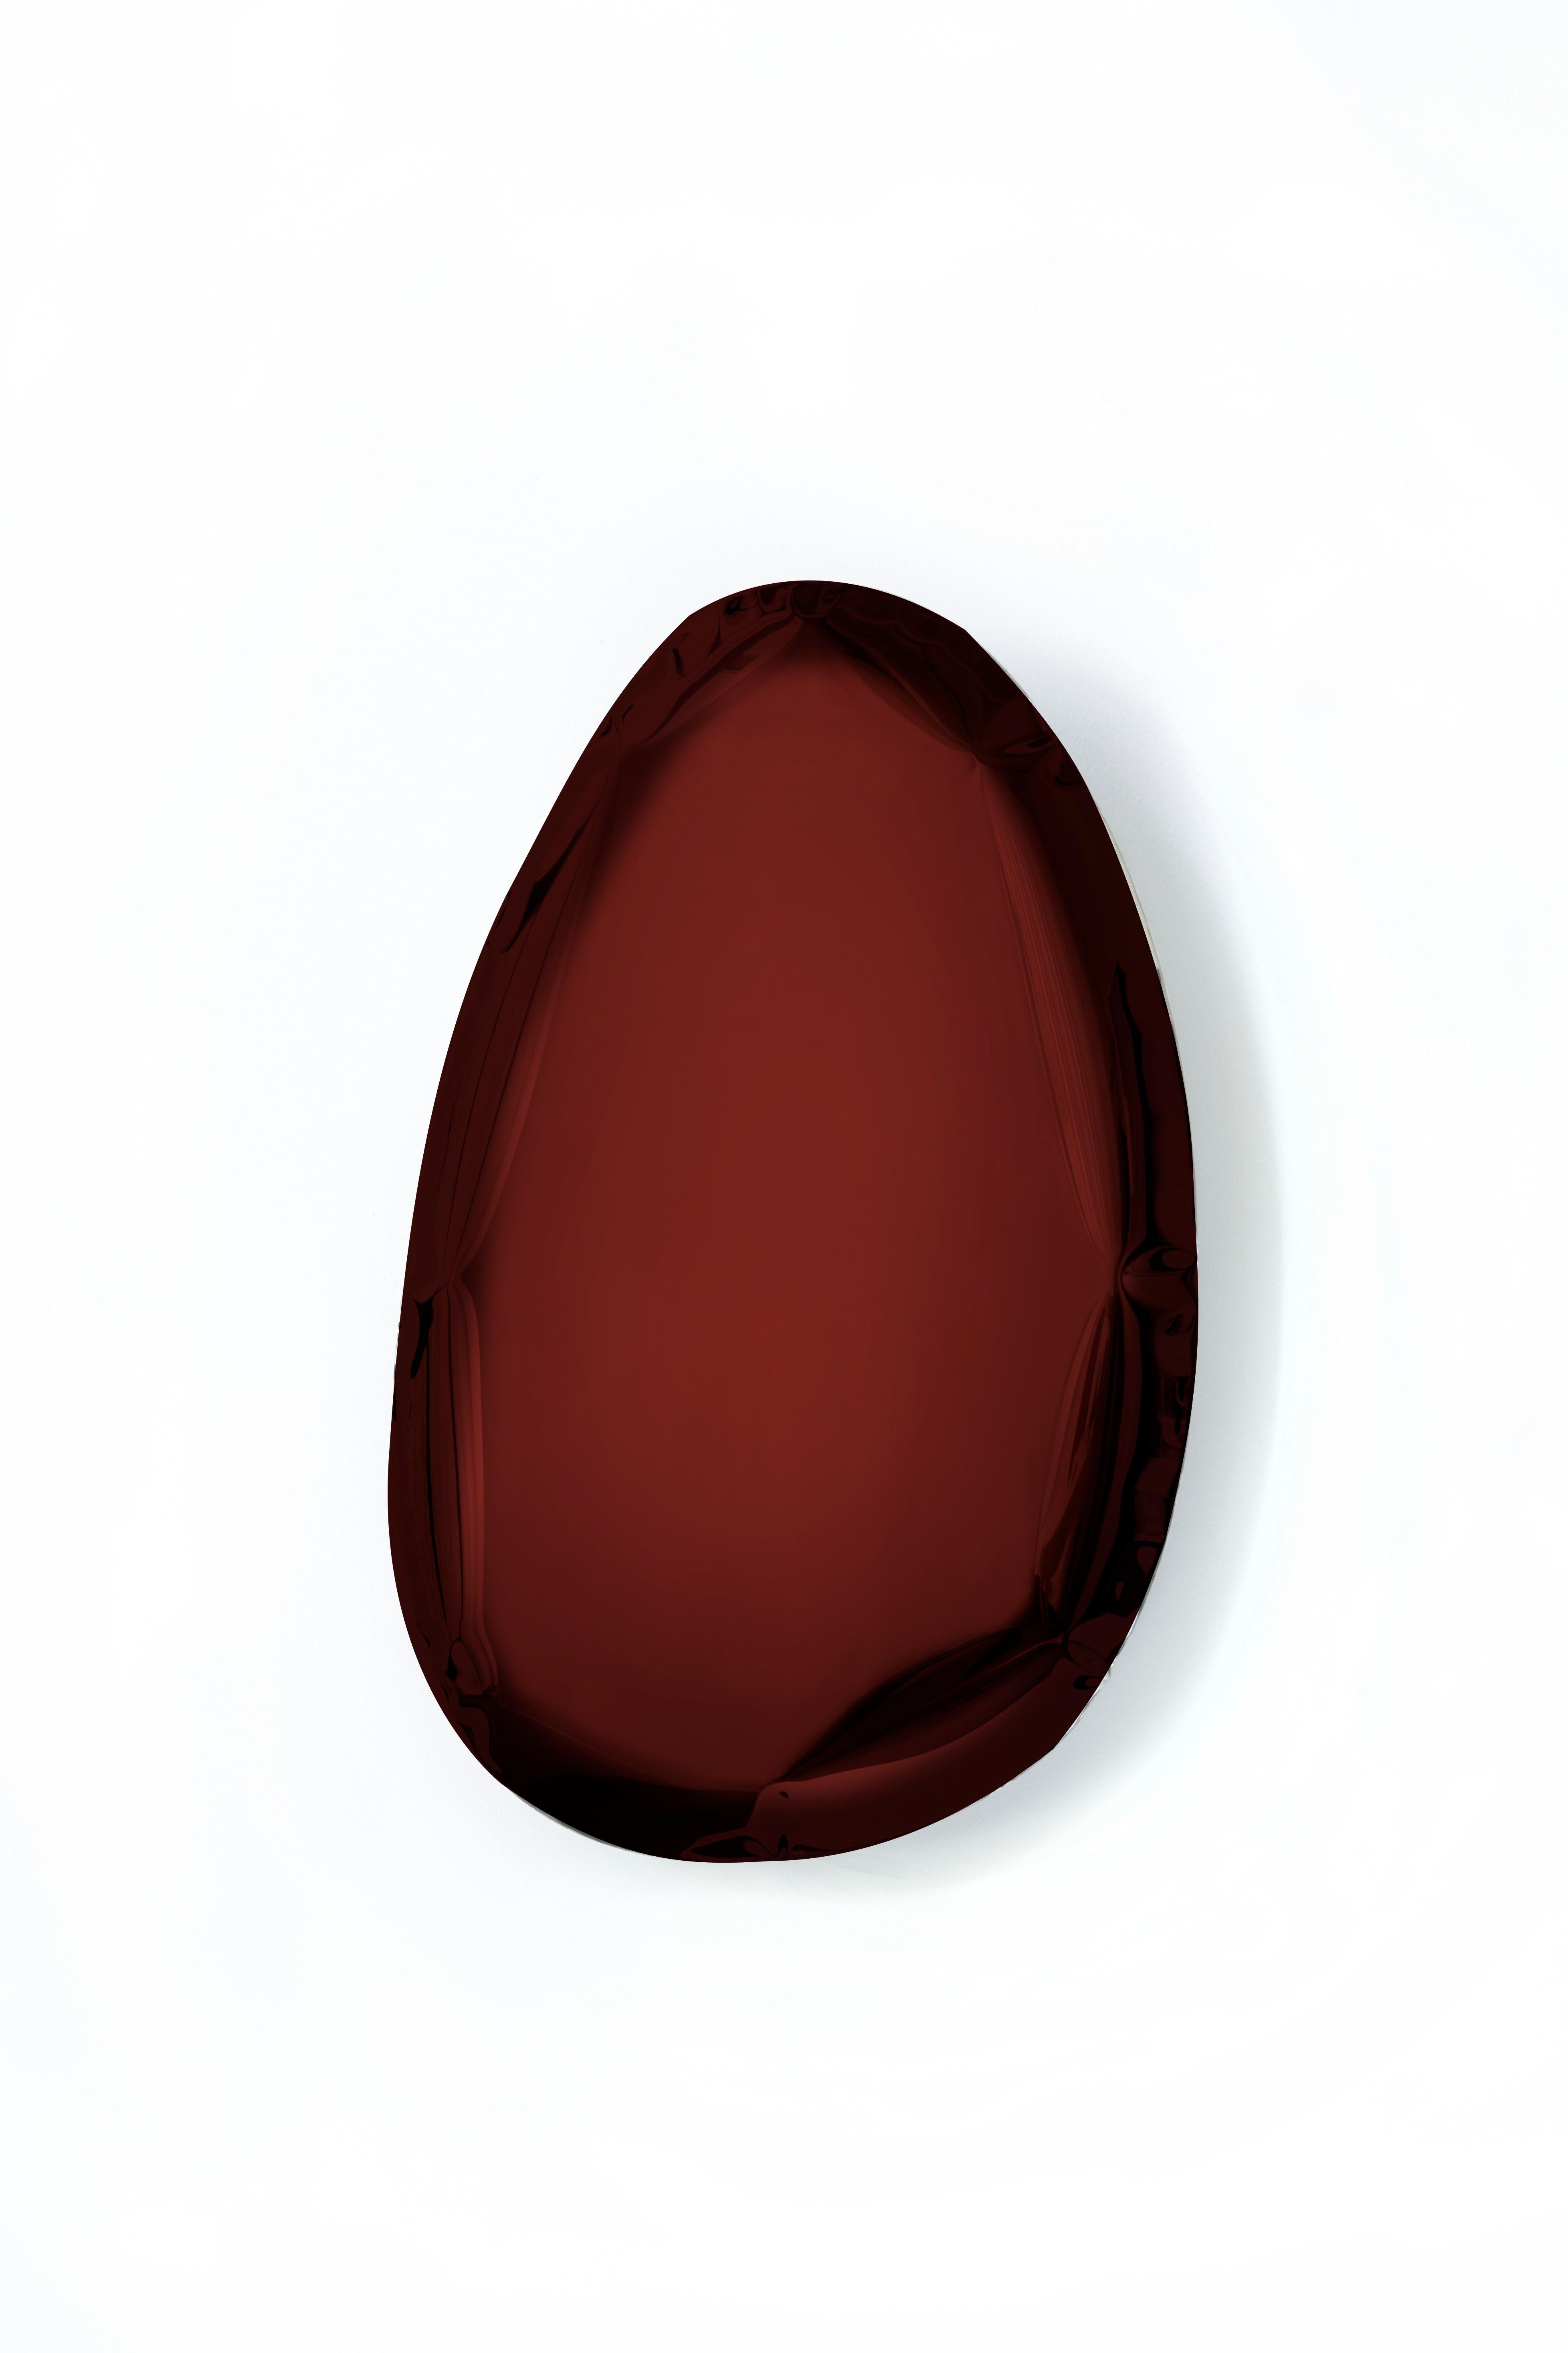 Mirror Tafla O6 Rubin Red, in Polished Stainless Steel by Zieta For Sale 2